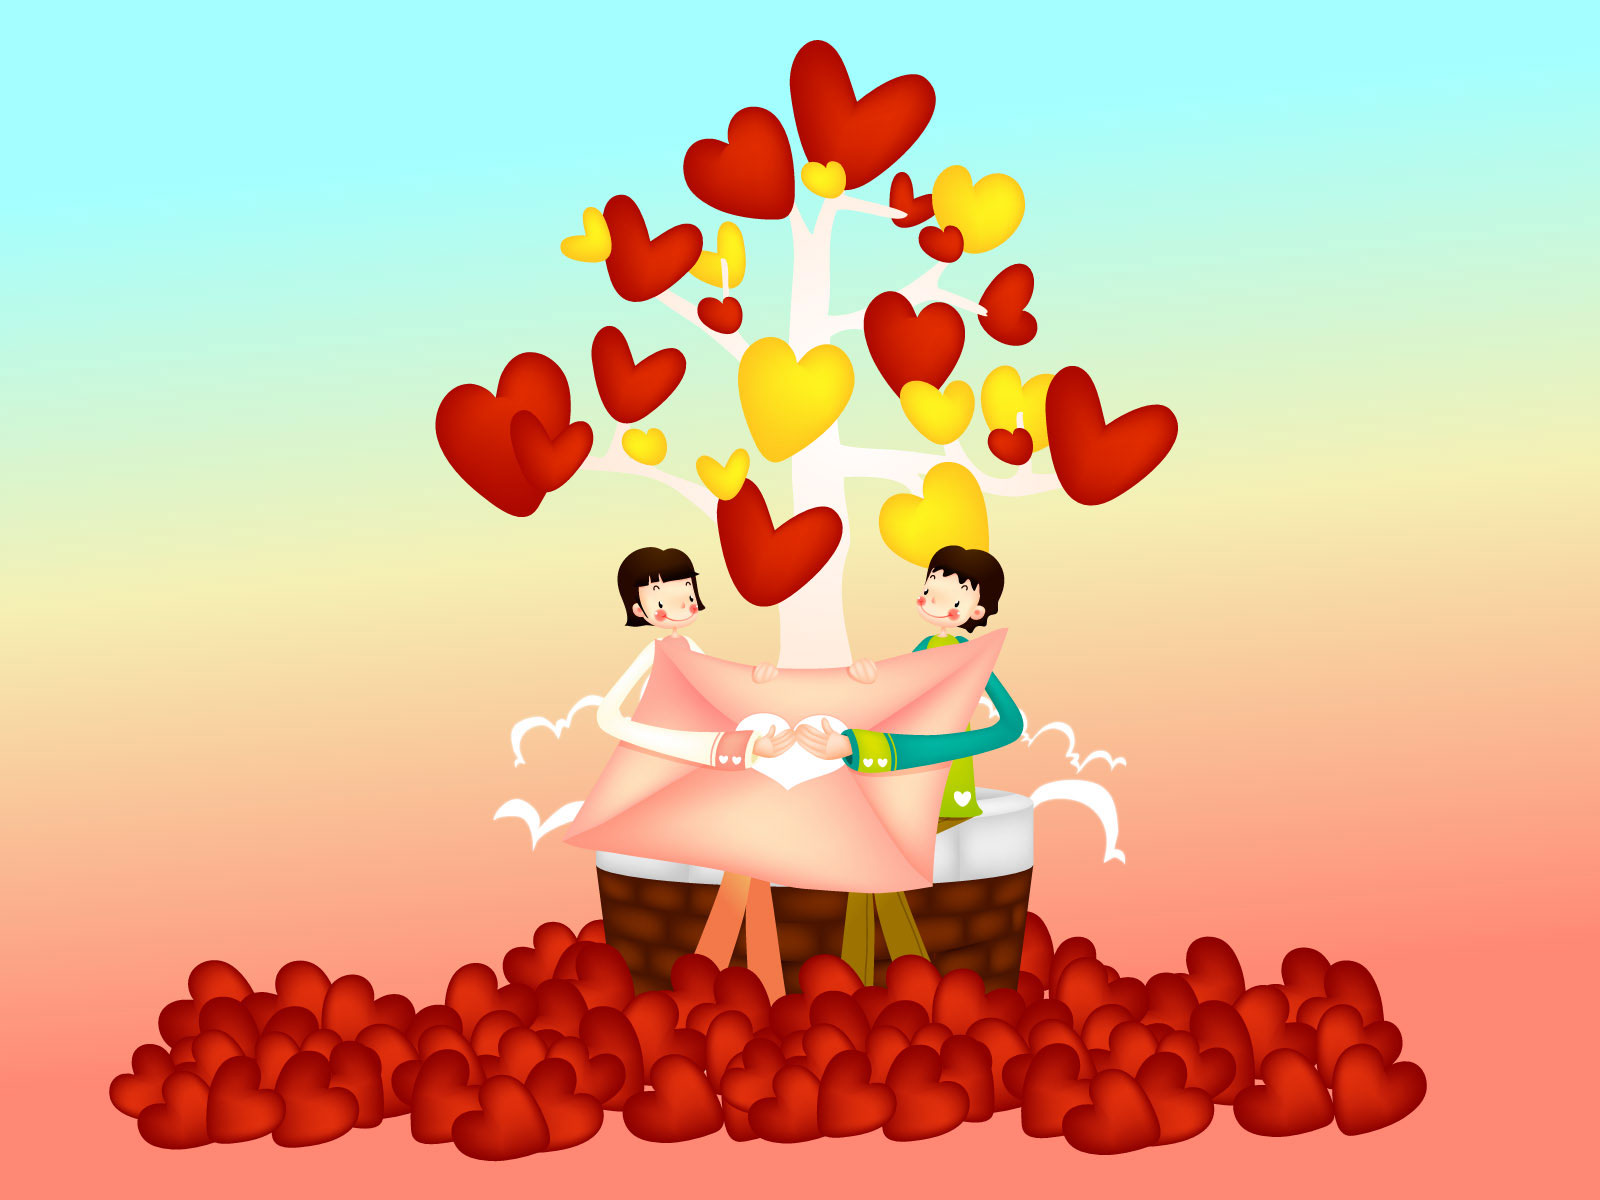 http://3.bp.blogspot.com/-39yFRcBdrTw/TkUx38_MRHI/AAAAAAAA1Gc/9U3D8zTpaYw/s1600/Couple-in-Love-Cartoon.jpg